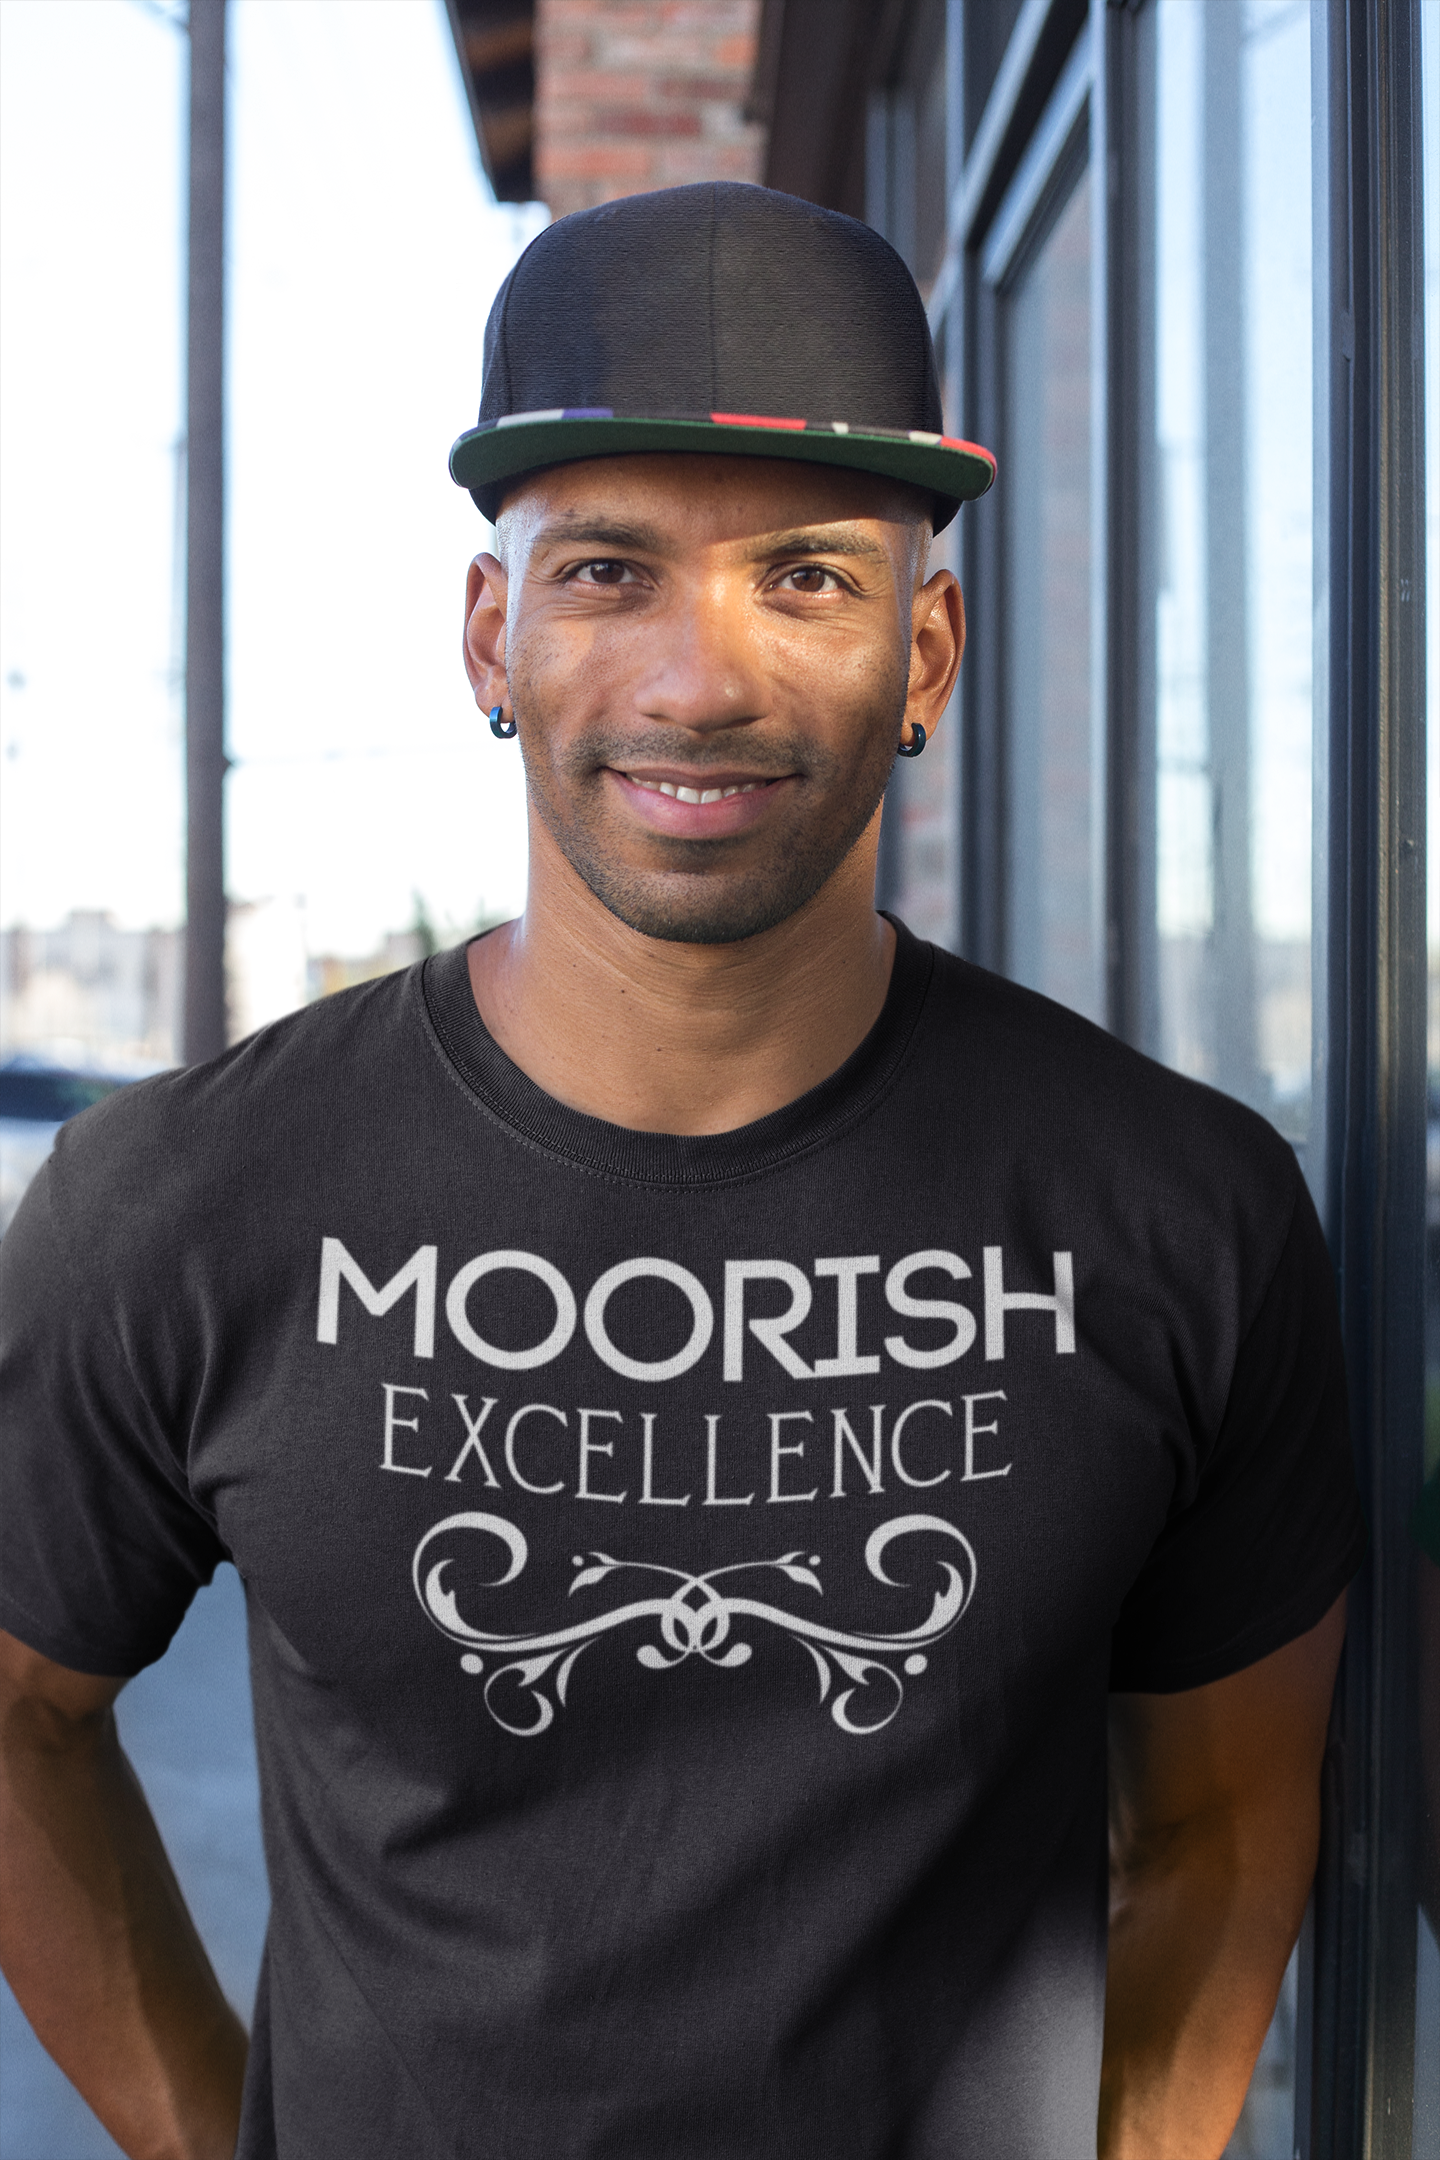 Moorish Excellence